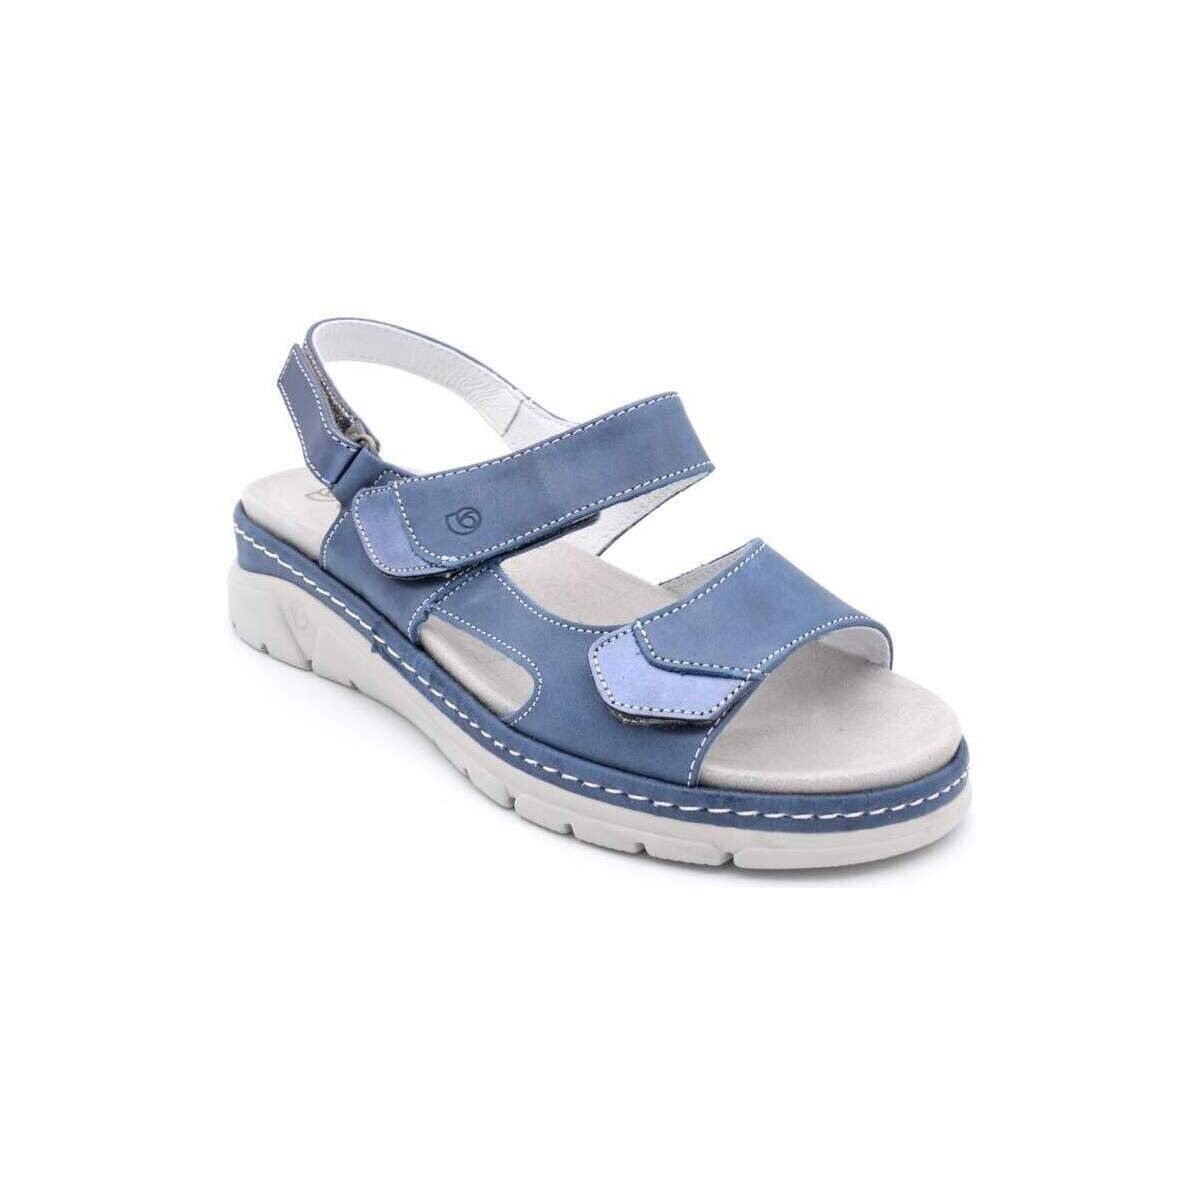 Schuhe Damen Sandalen / Sandaletten Suave 3351 Blau